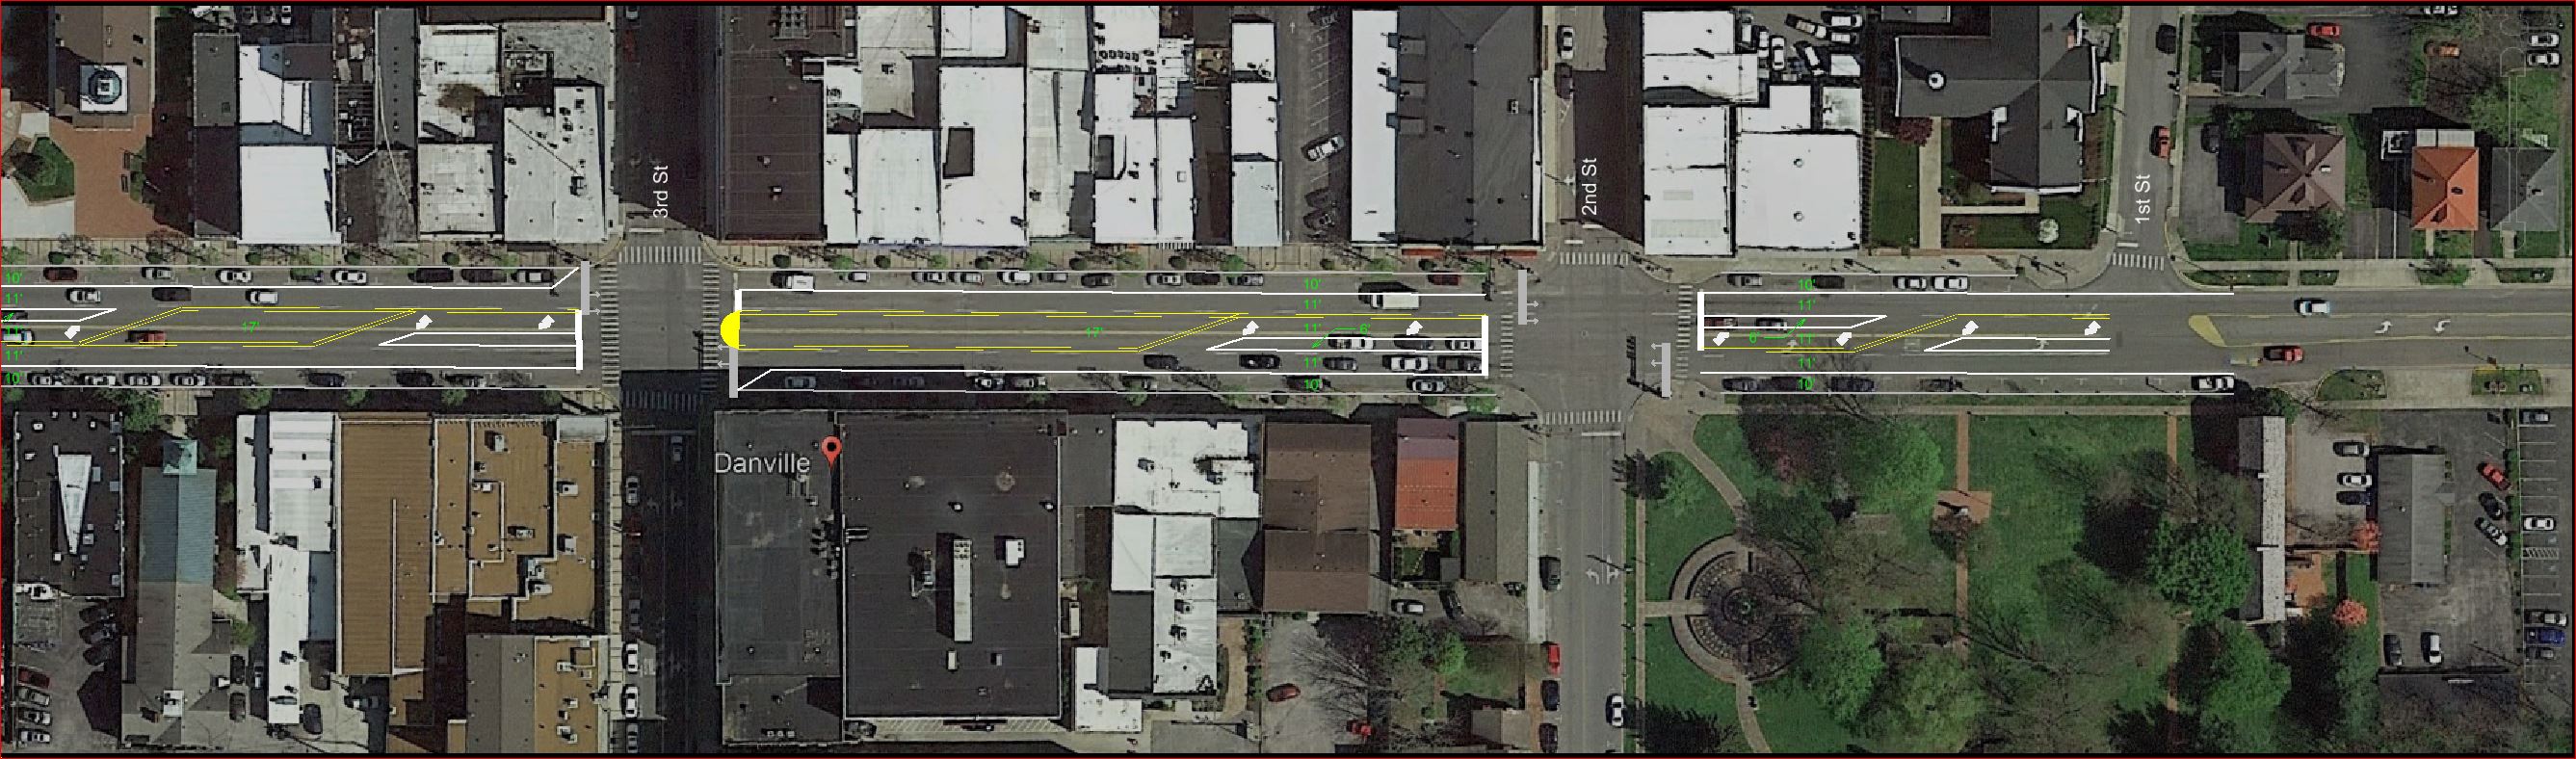 FINAL Danville Main St Striping (no bike lanes)_Page_2.jpg